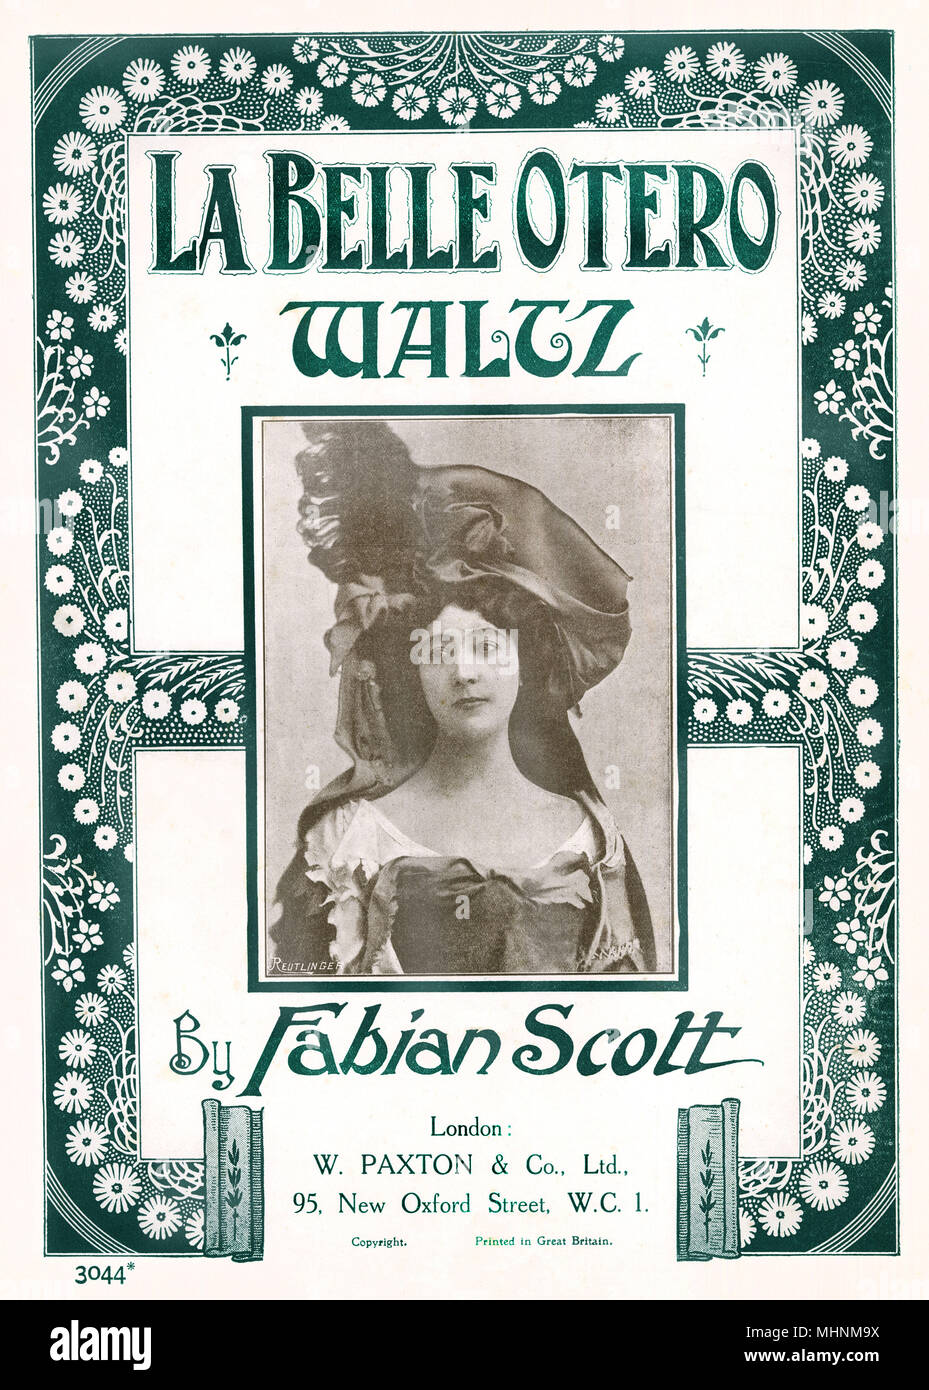 La Belle Otero by Waltz - Music Sheet Cover Stock Photo